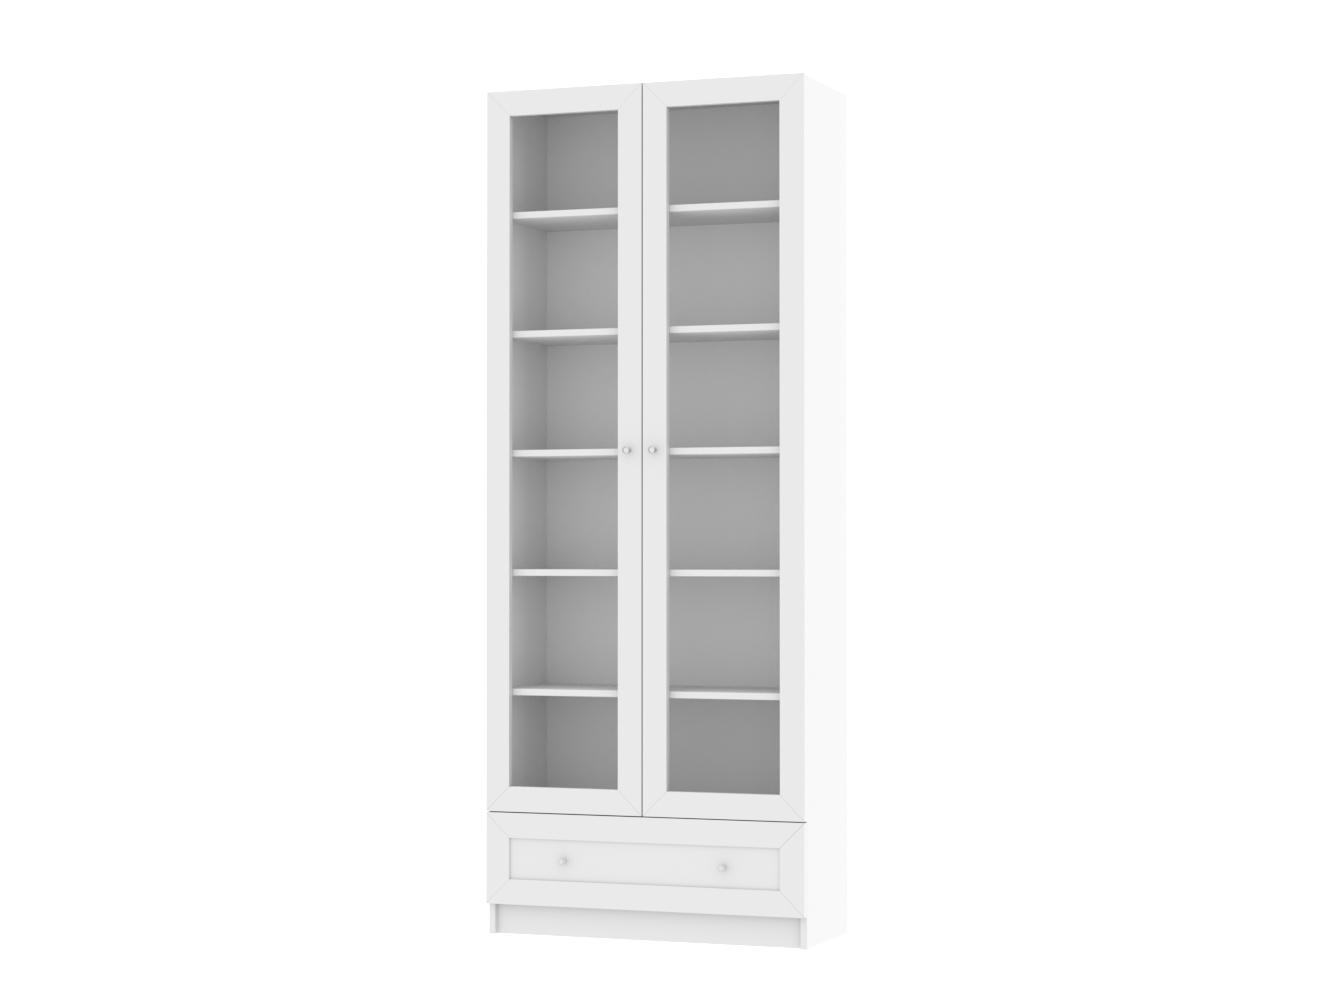 Книжный шкаф Билли 427 white ИКЕА (IKEA) изображение товара